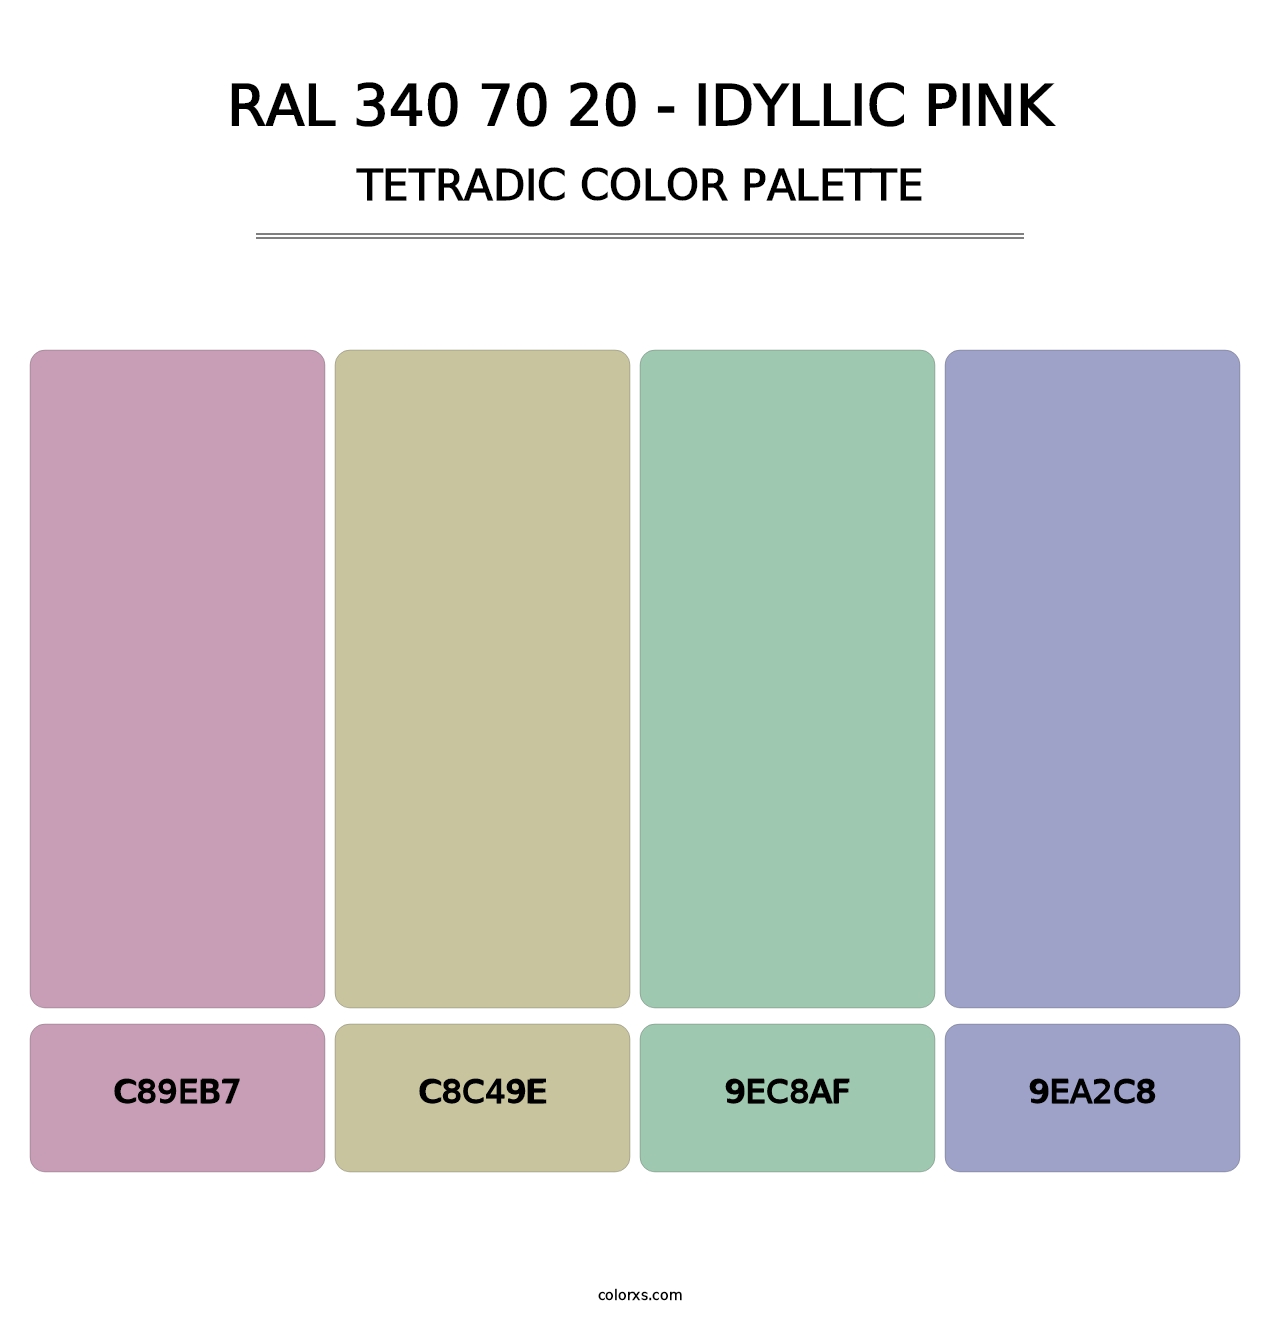 RAL 340 70 20 - Idyllic Pink - Tetradic Color Palette